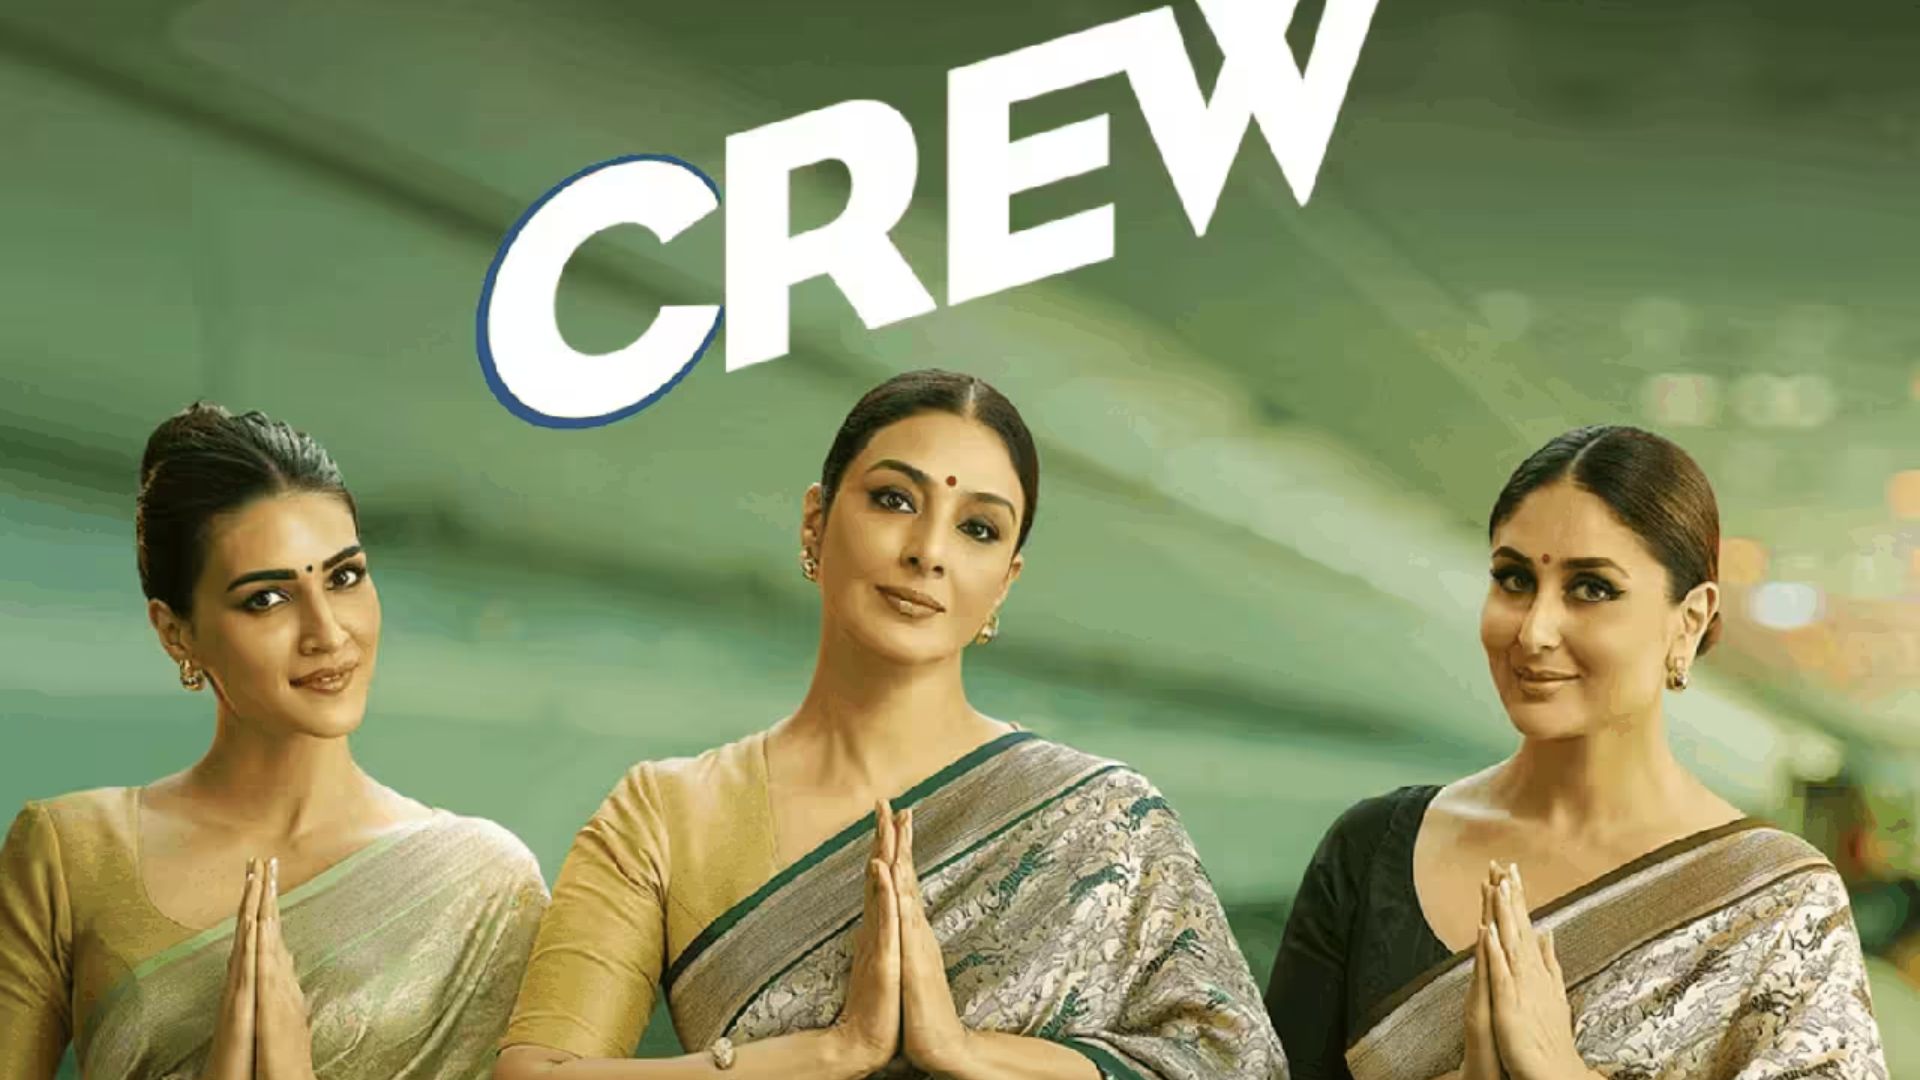 ‘Crew’ 3 days’  box office collection: Kareena Kapoor Khan’s film set to enter Rs 30 crore club